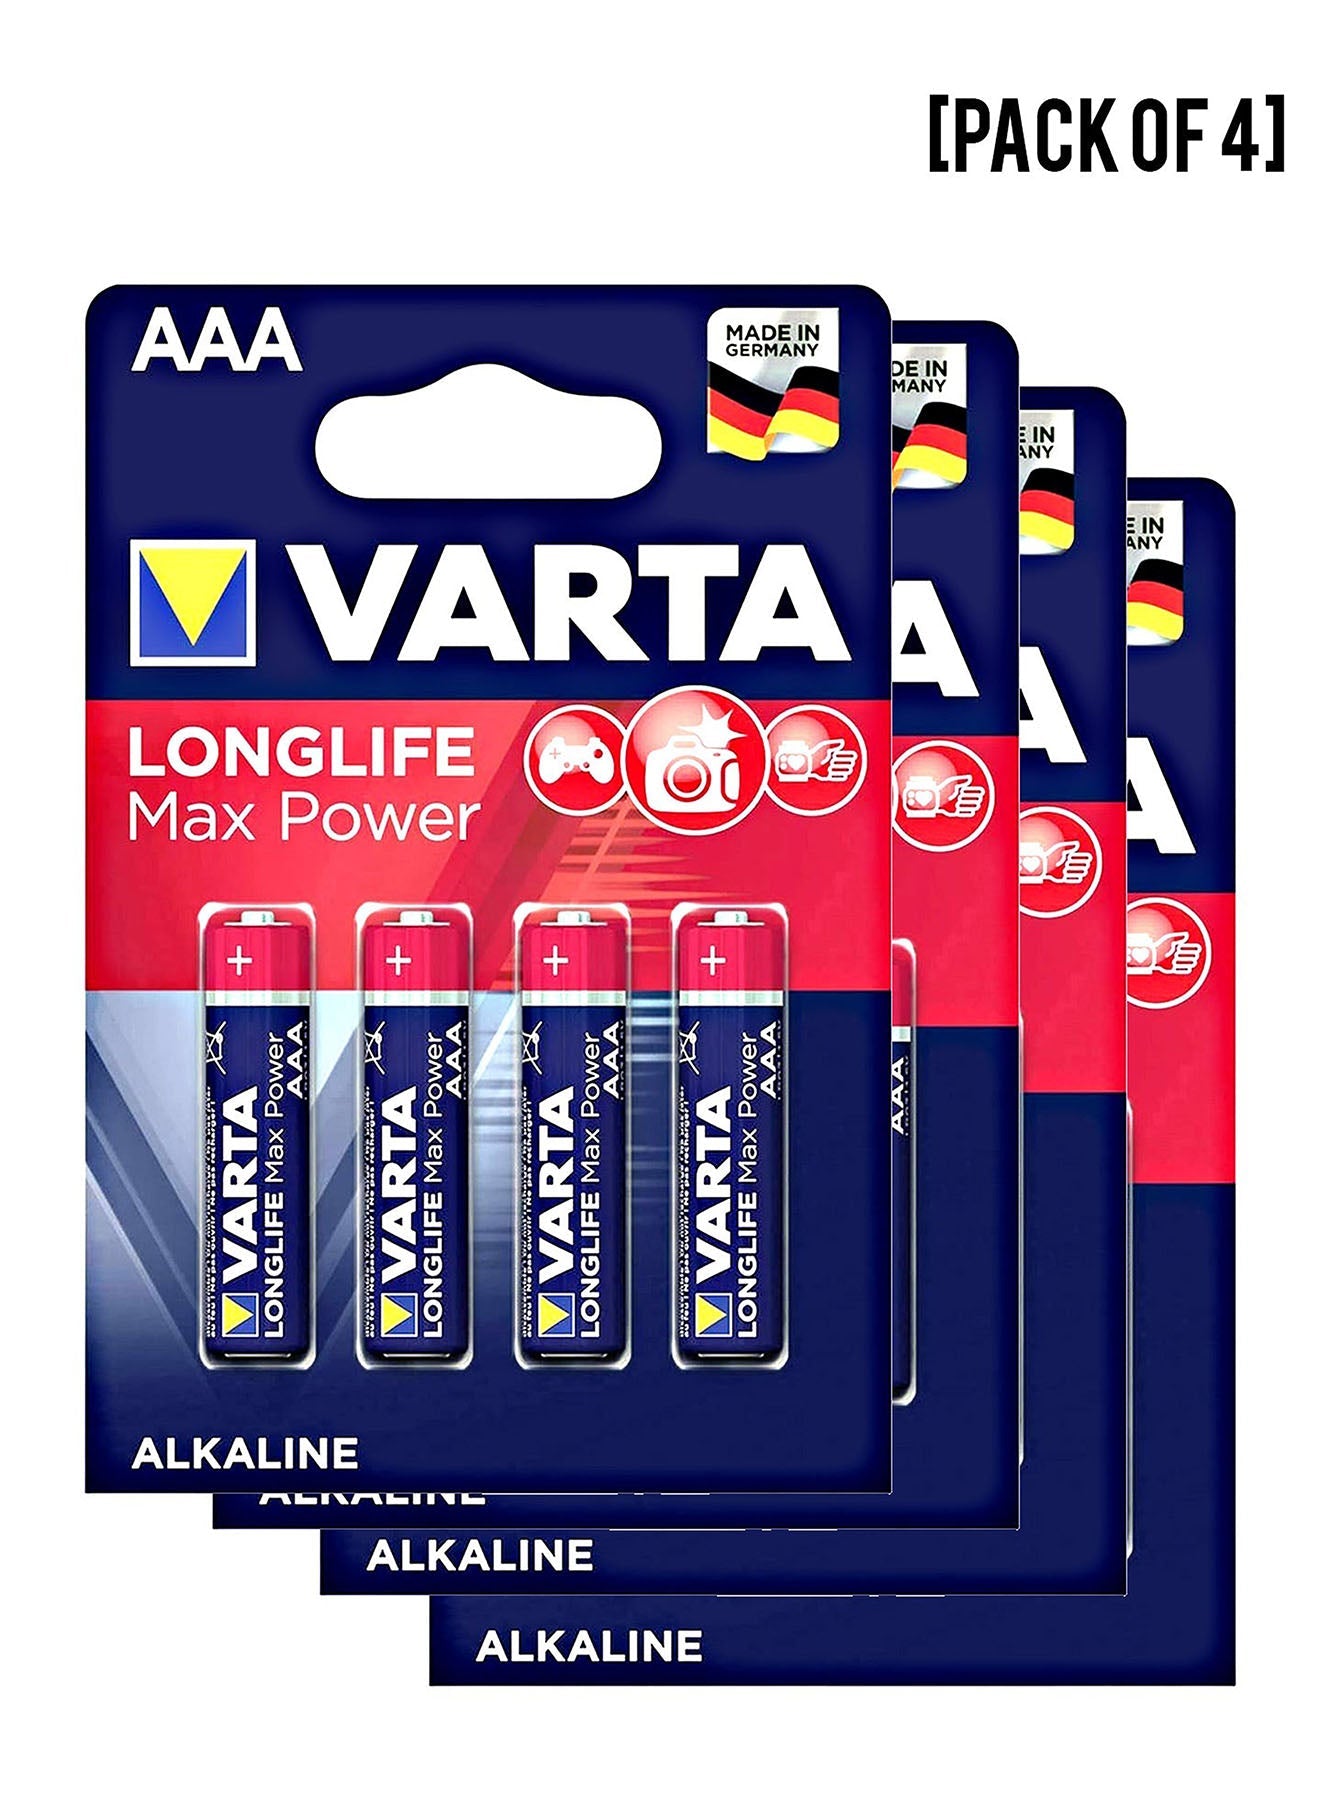 Varta Long Life Max Power Micro AAA Batteries 4 Units Value Pack of 4 